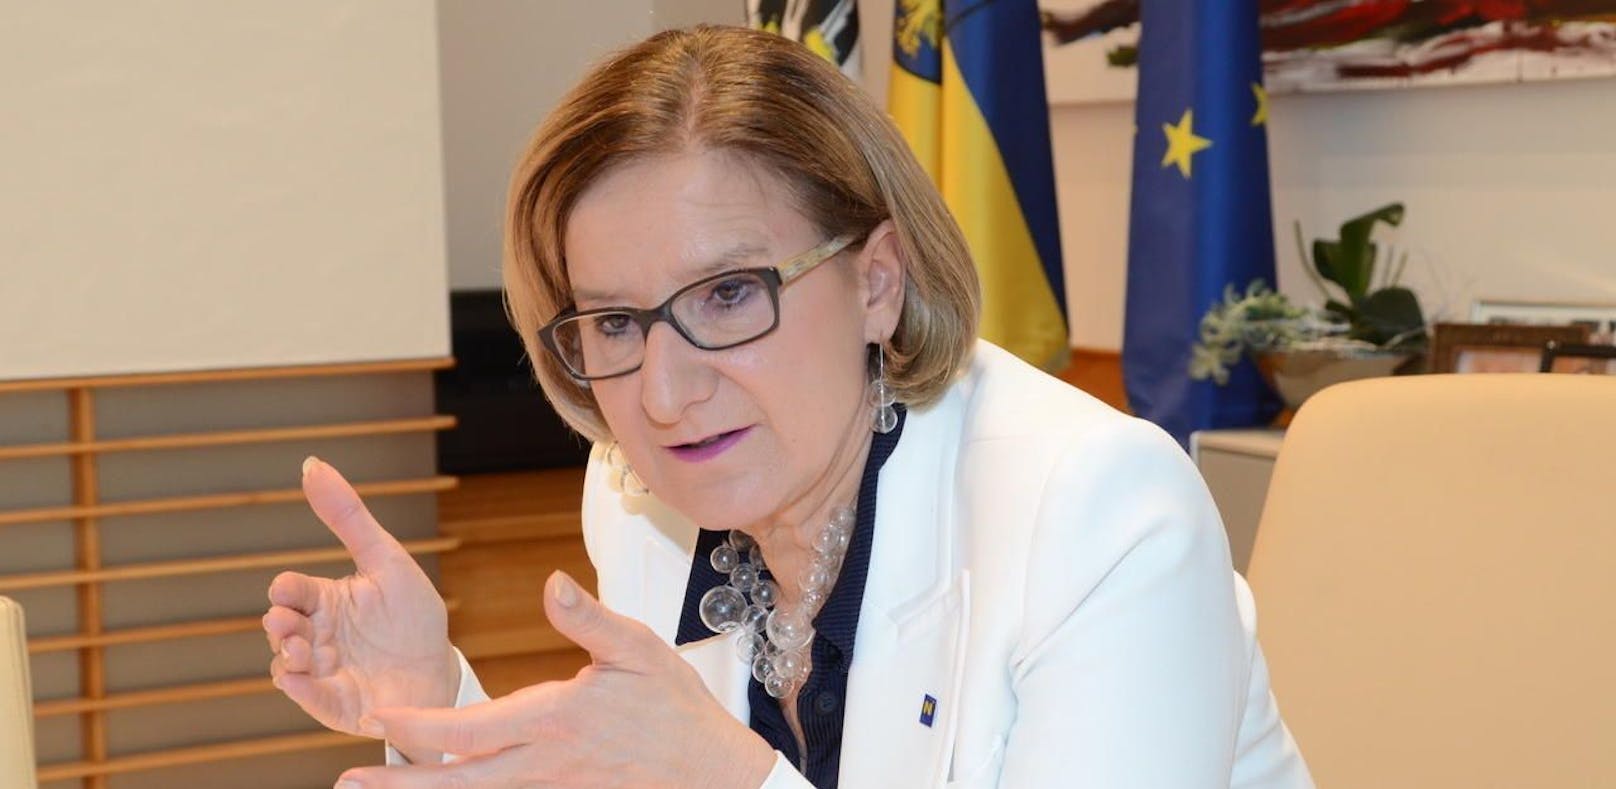 Landeshauptfrau Johanna Mikl-Leitner hat viel, blau-gelbe Politerfahrung.